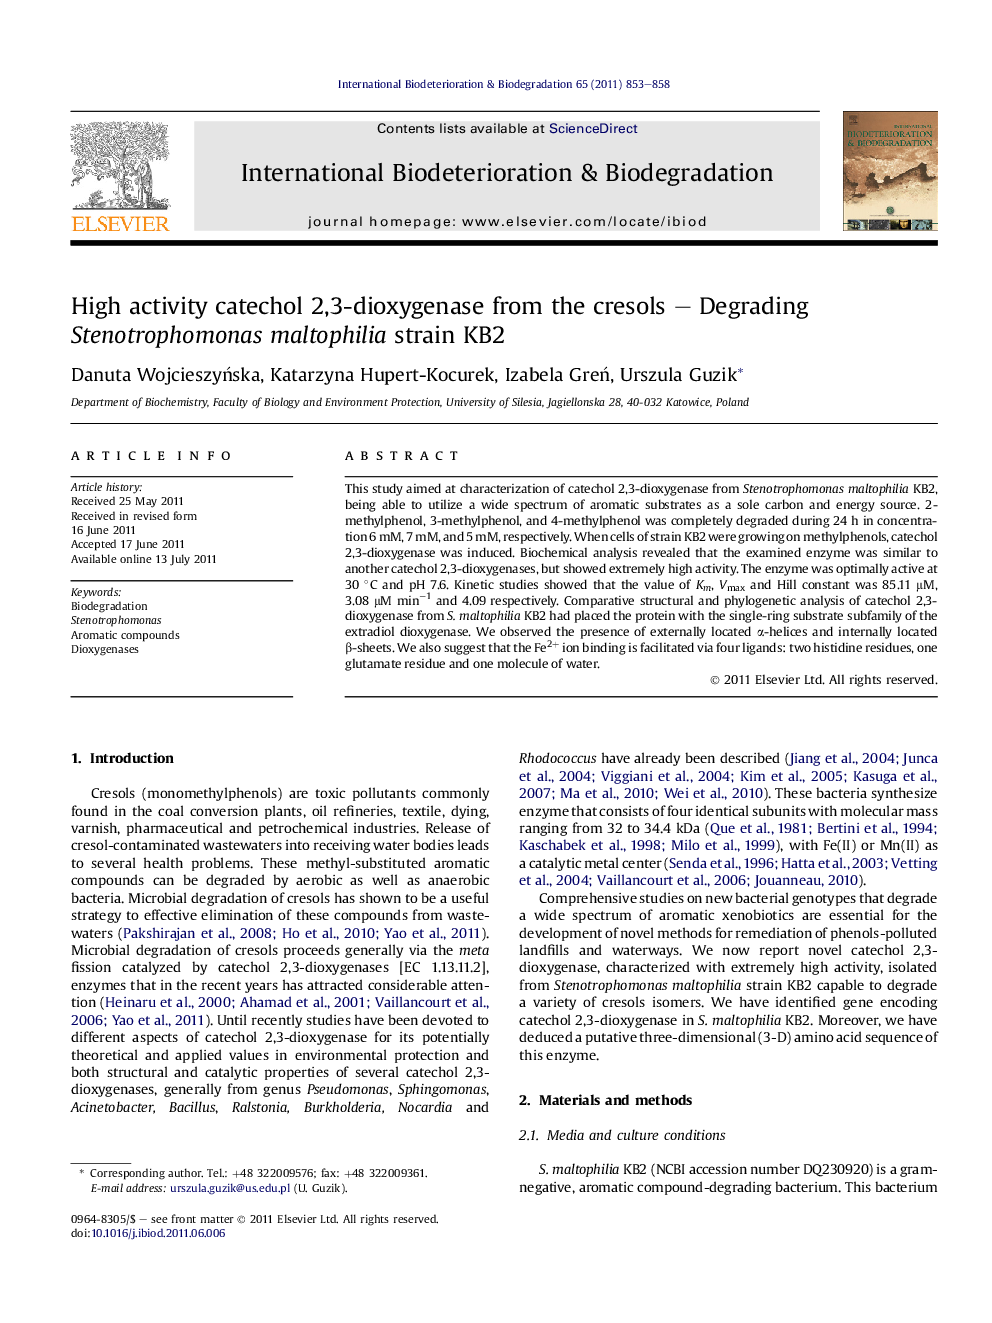 High activity catechol 2,3-dioxygenase from the cresols – Degrading Stenotrophomonas maltophilia strain KB2